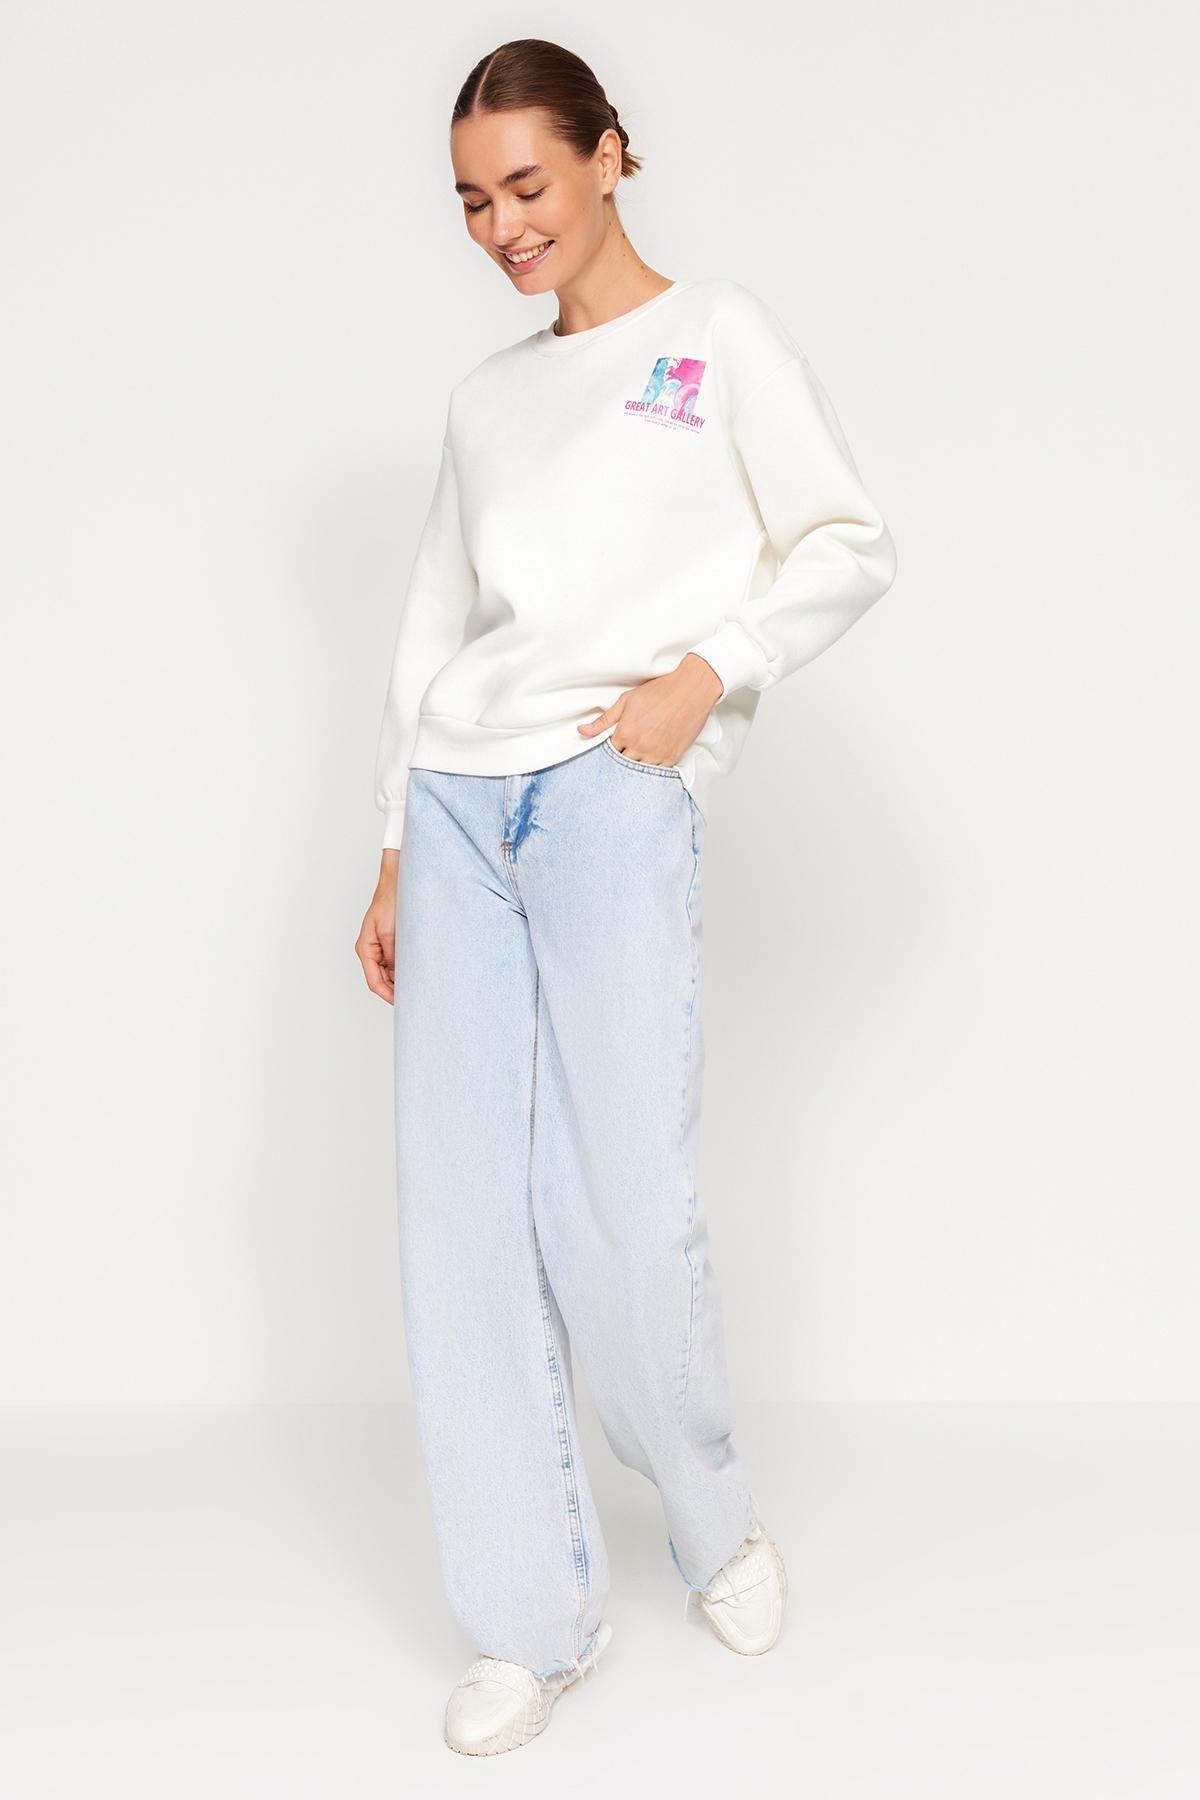 Trendyol - White Printed Knitted Sweatshirt